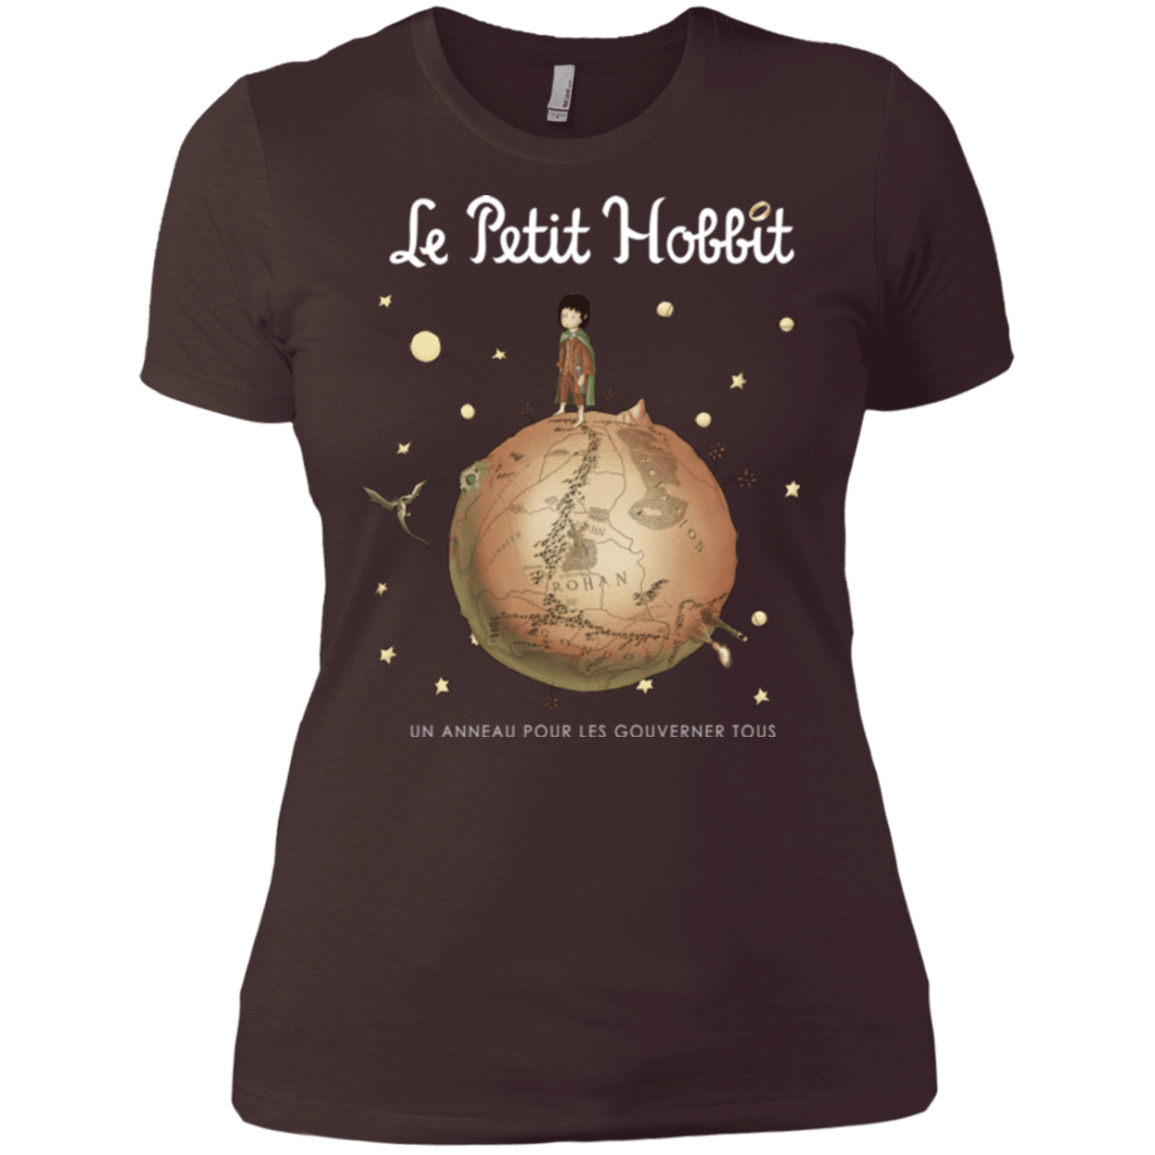 T-Shirts Dark Chocolate / X-Small Le Petit Hobbit Women's Premium T-Shirt